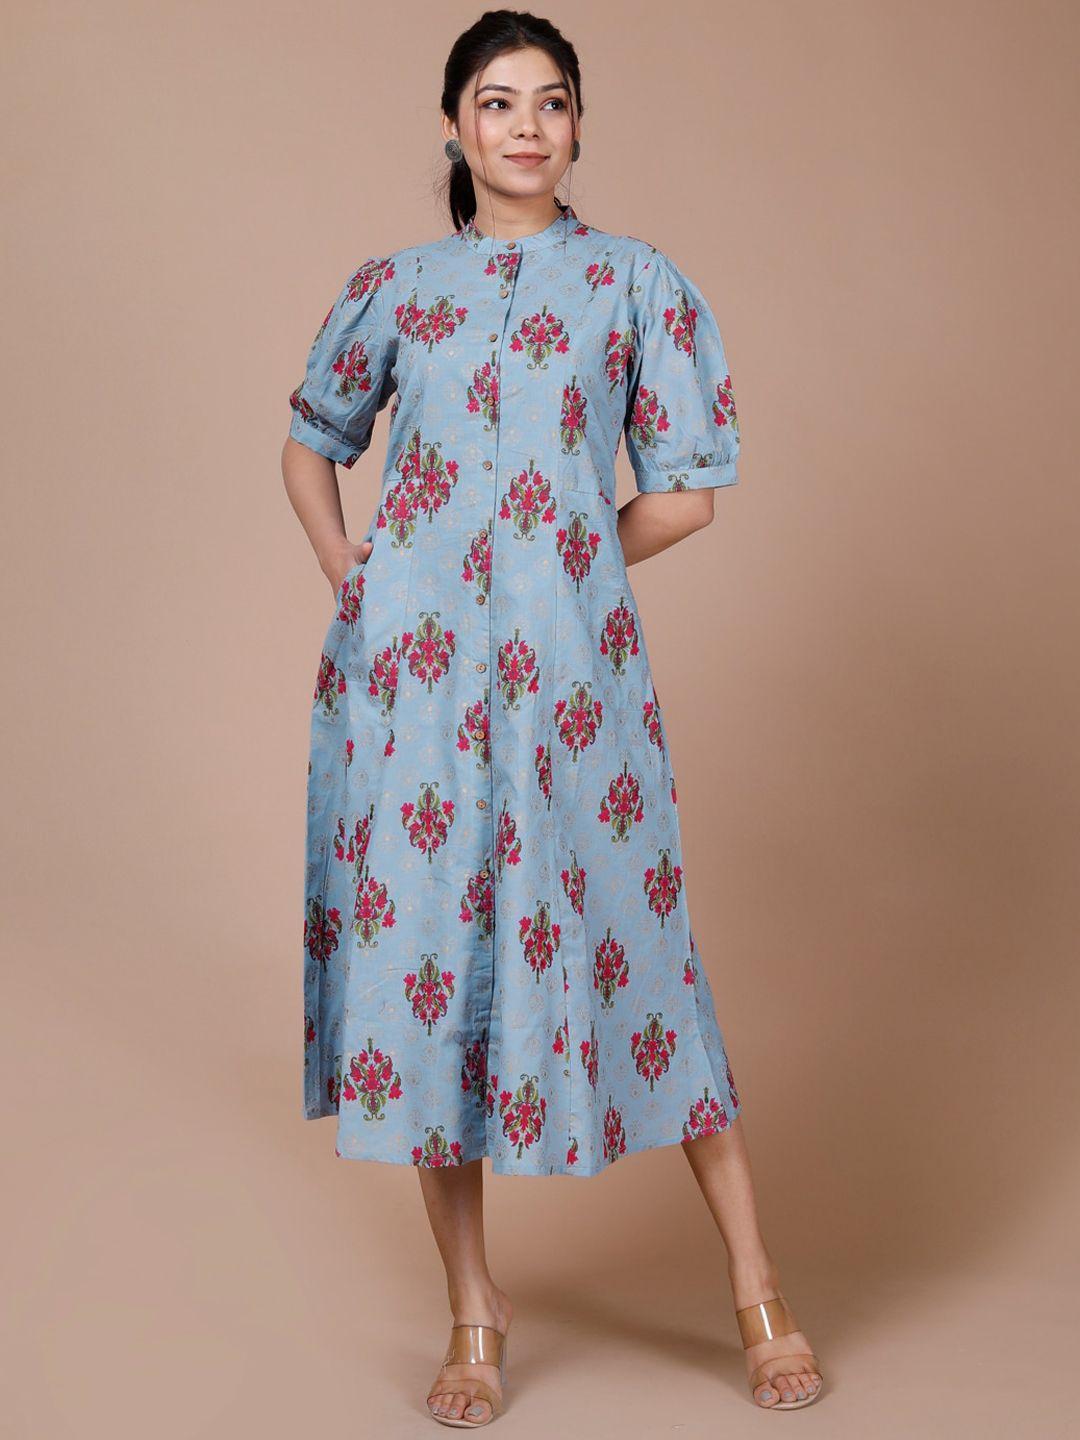 desi beats floral printed pure cotton a-line ethnic dress